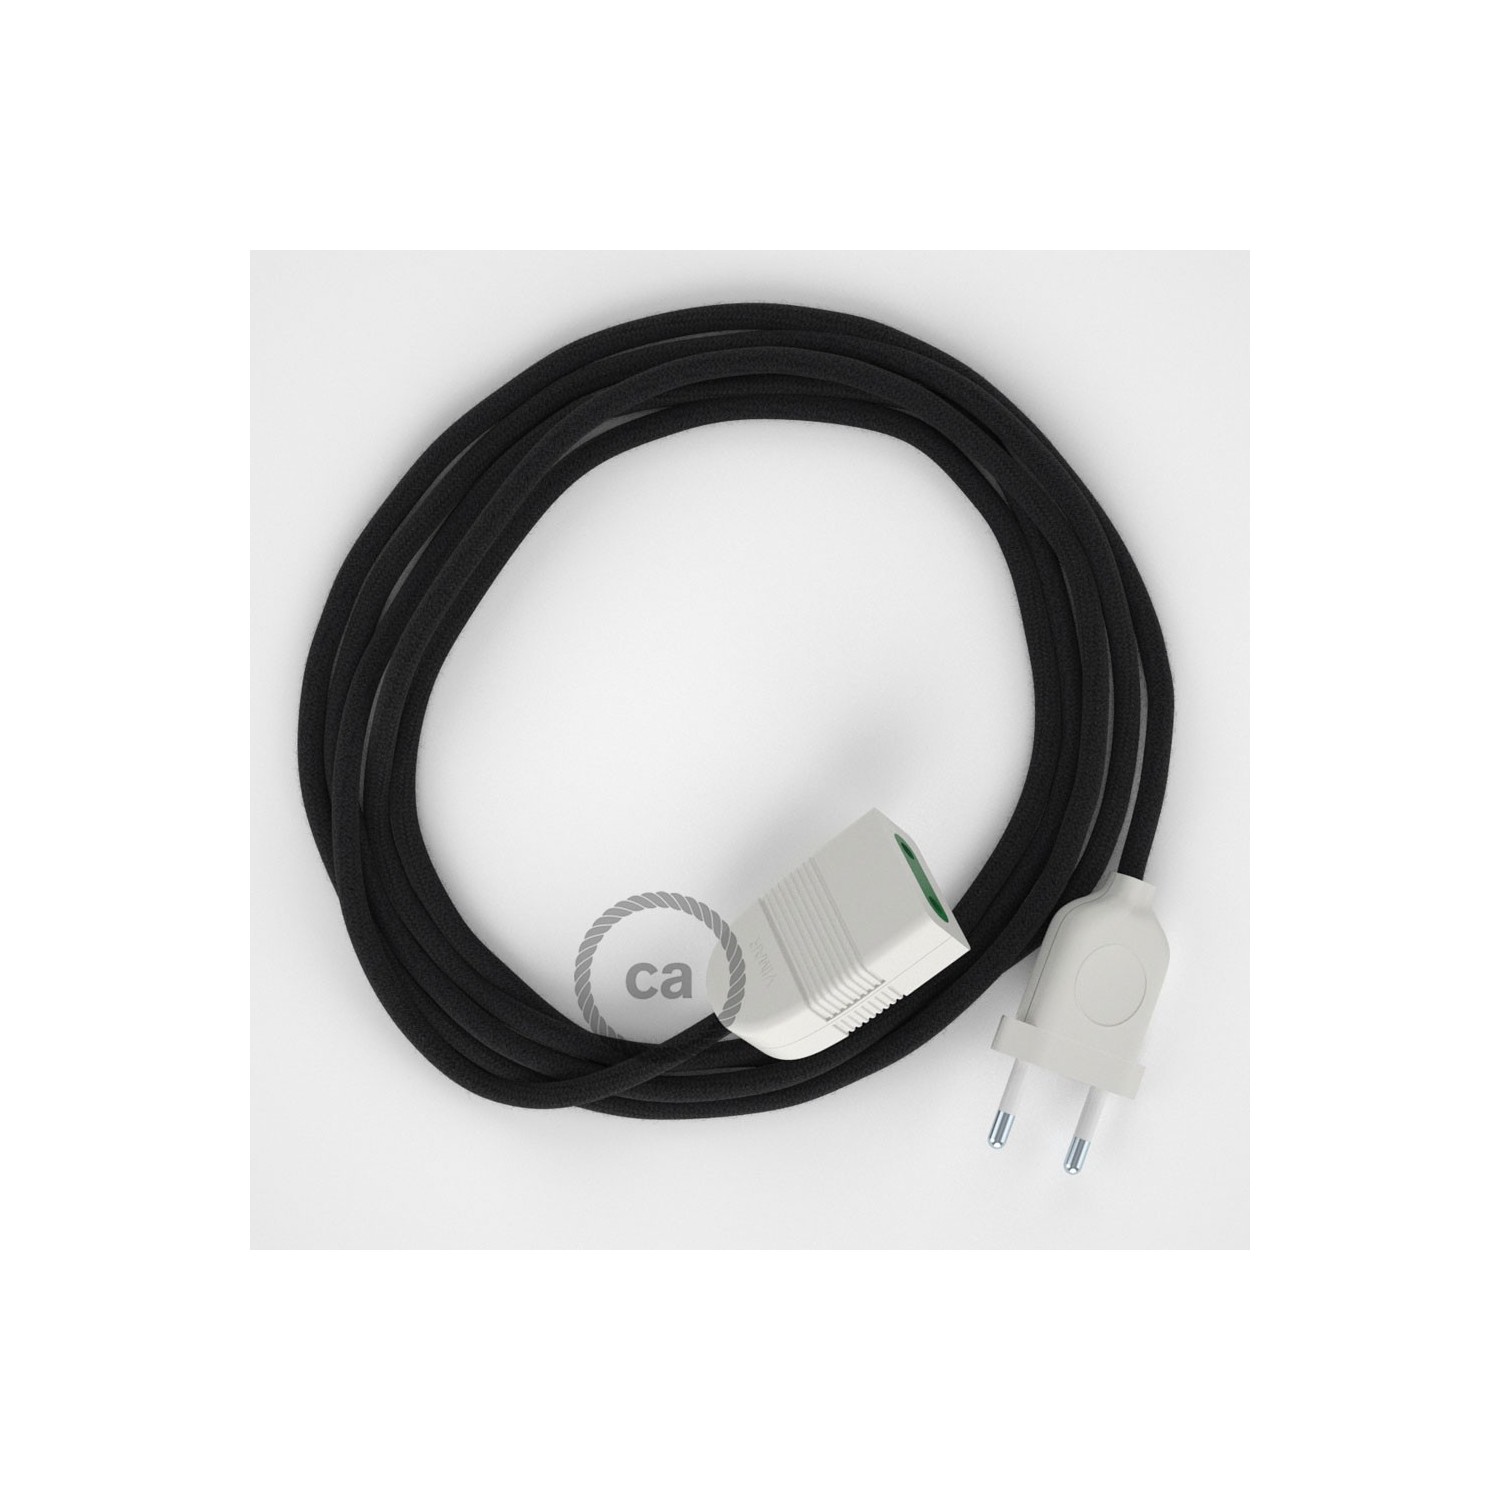 Rallonge électrique avec câble textile RC04 Coton Noir 2P 10A Made in Italy.